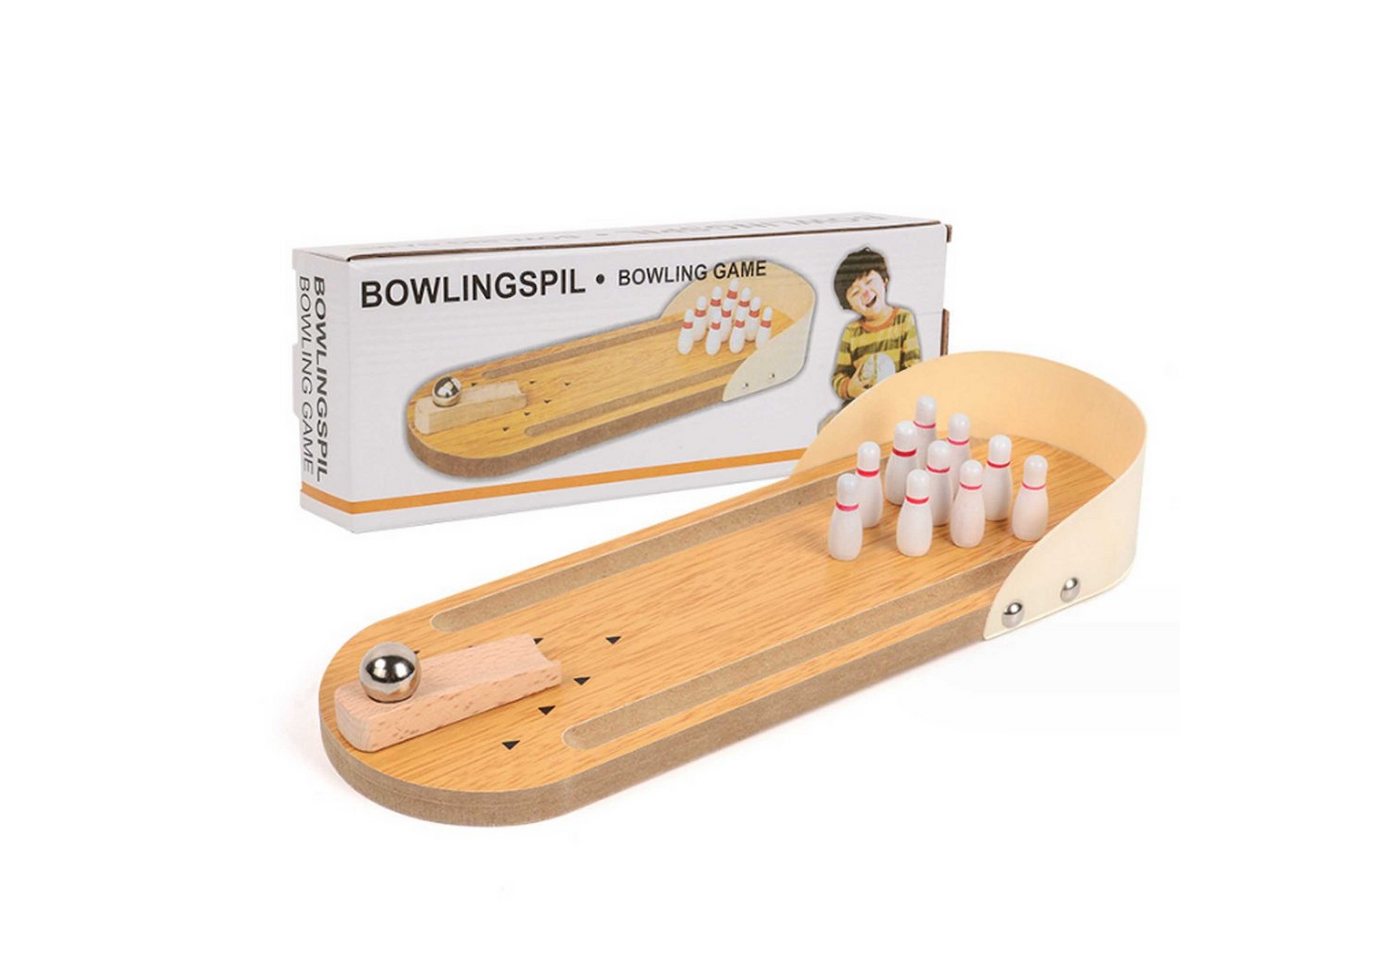 Kind Ja Bowlingball Miniatur-Bowlingkugel, Holz Kleines Spielzeug, Lernspielzeug, kompakt (Tragbare Kits, 10 x kleine Bowlingkugeln, 1 x Stahlkugel), Lässiges Eltern-Kind-Spielzeug, gebogene Schallwand, stabiles Holz von Kind Ja